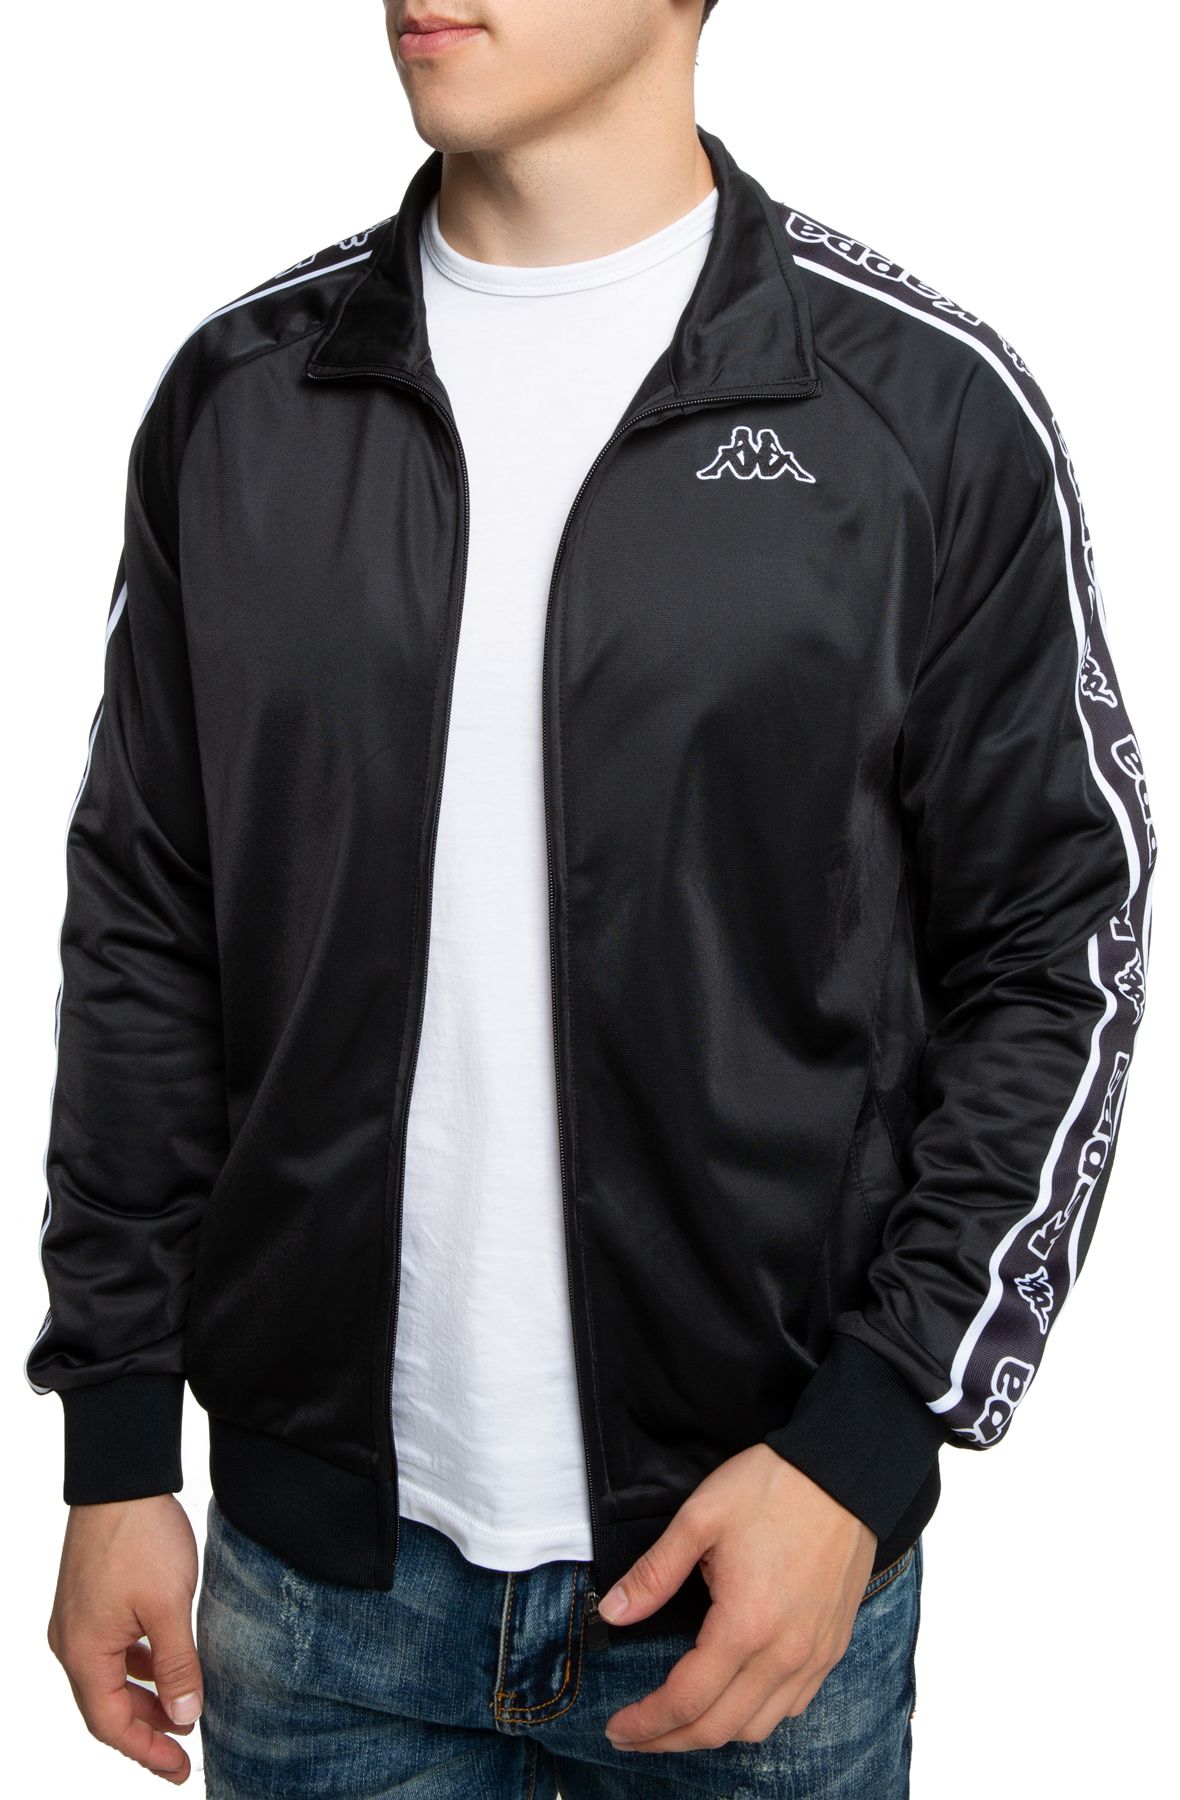 kappa black and white track jacket